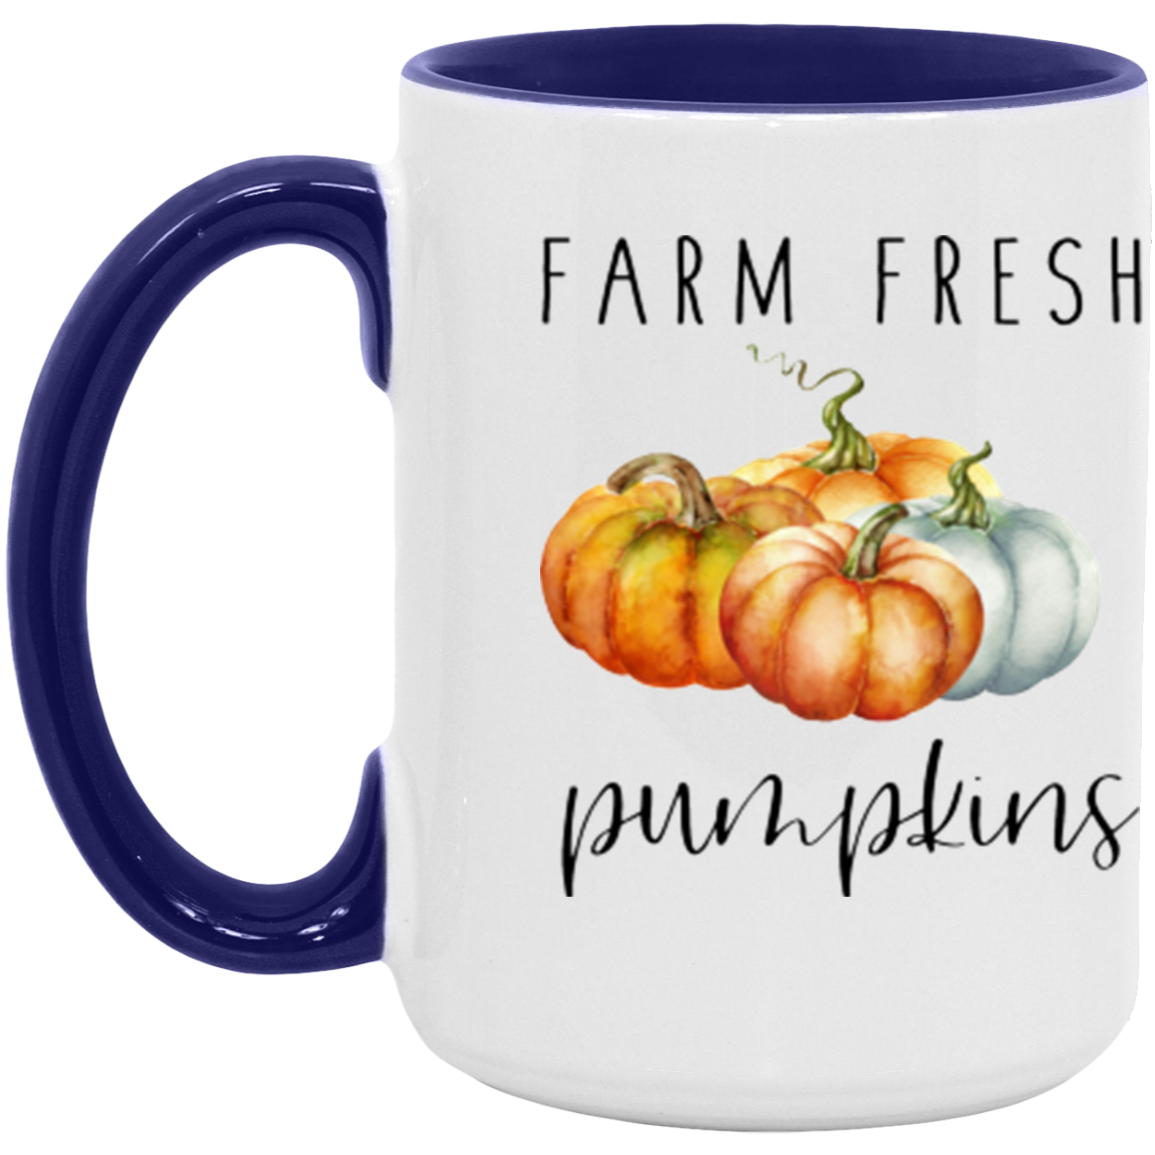 Farm Fresh Pumpkins Mug